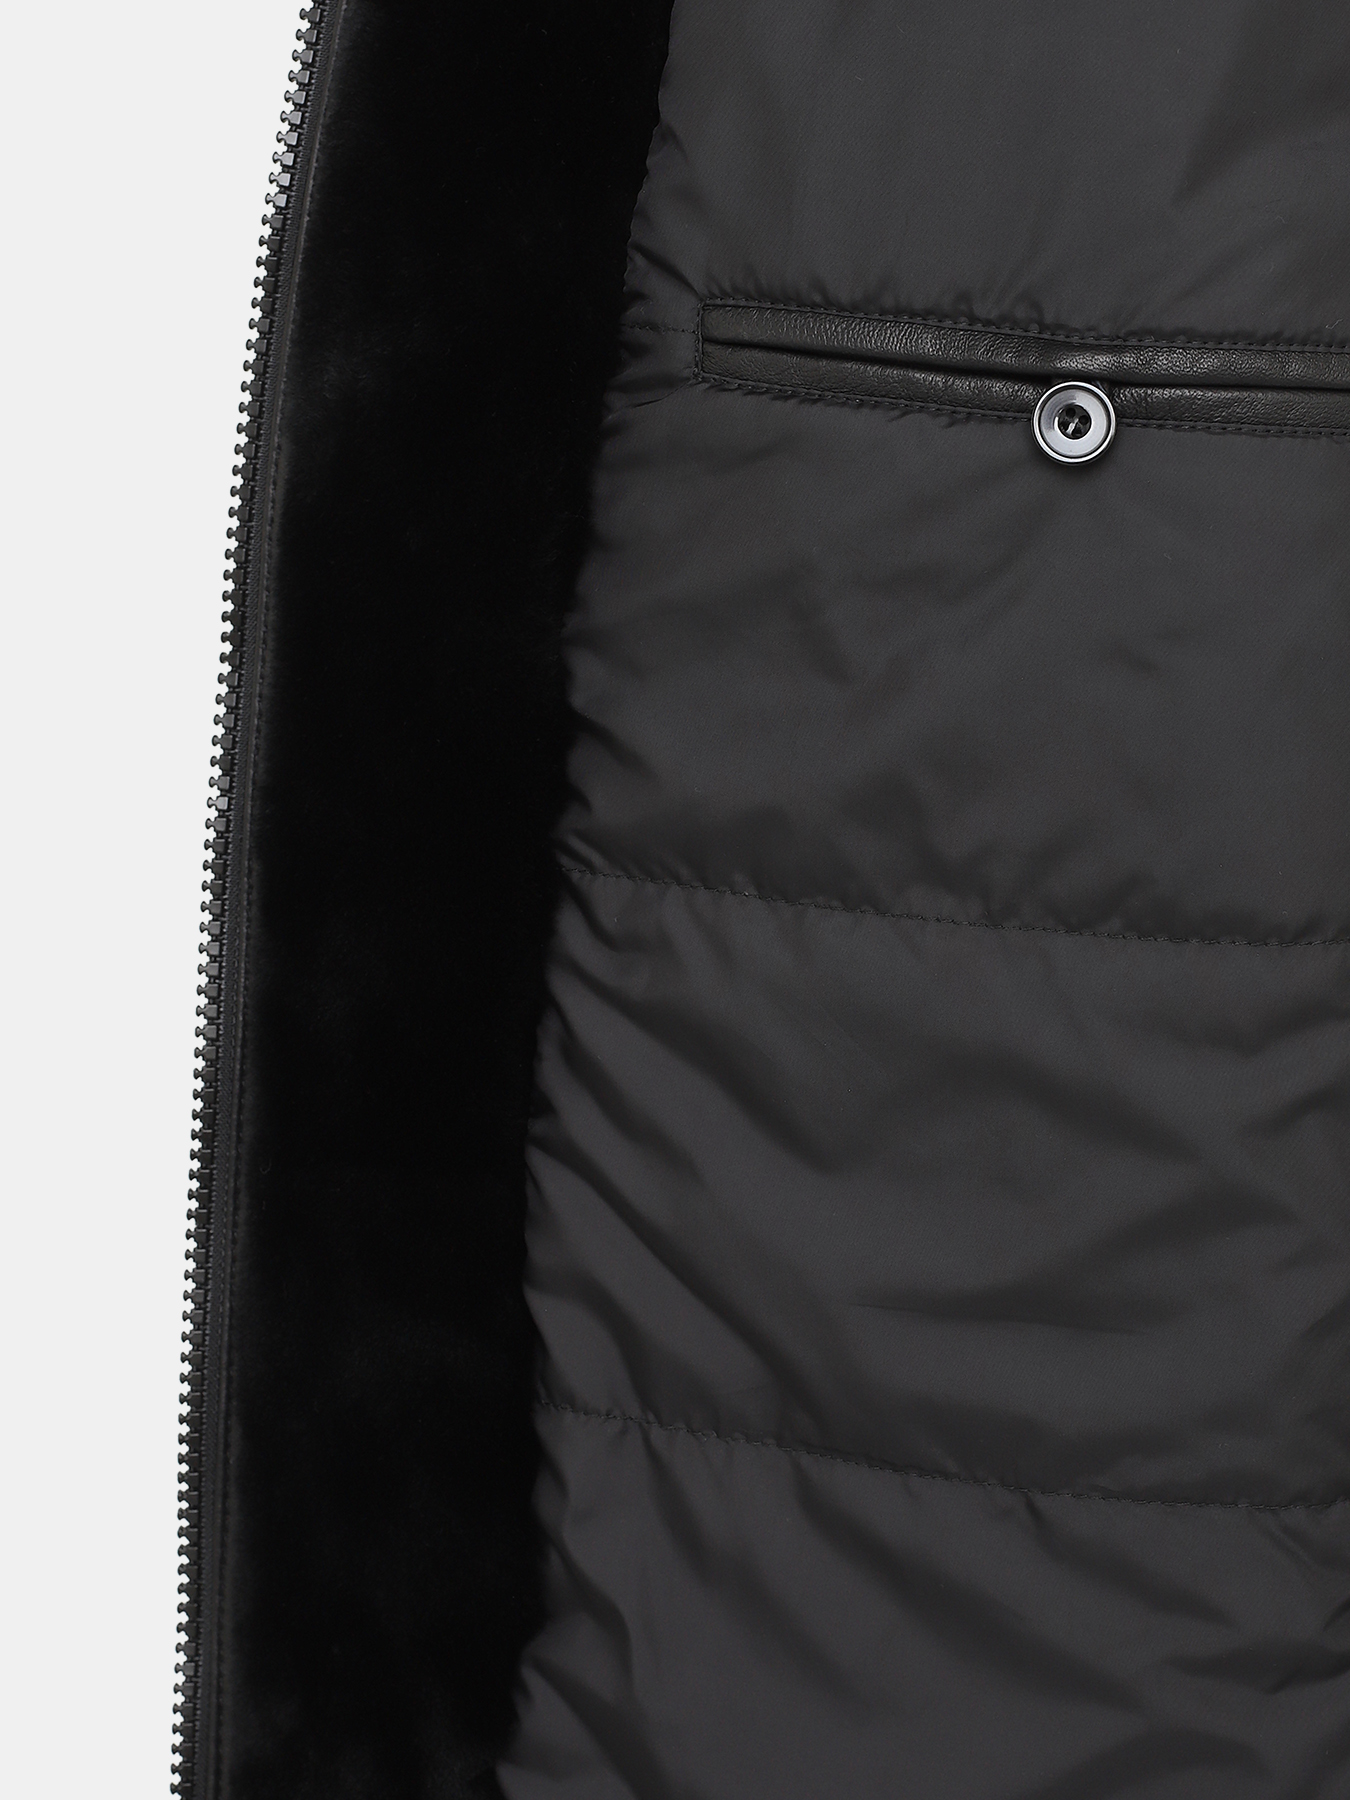 Кожаная куртка Ritter 390993-032, цвет черный, размер 62 - фото 5